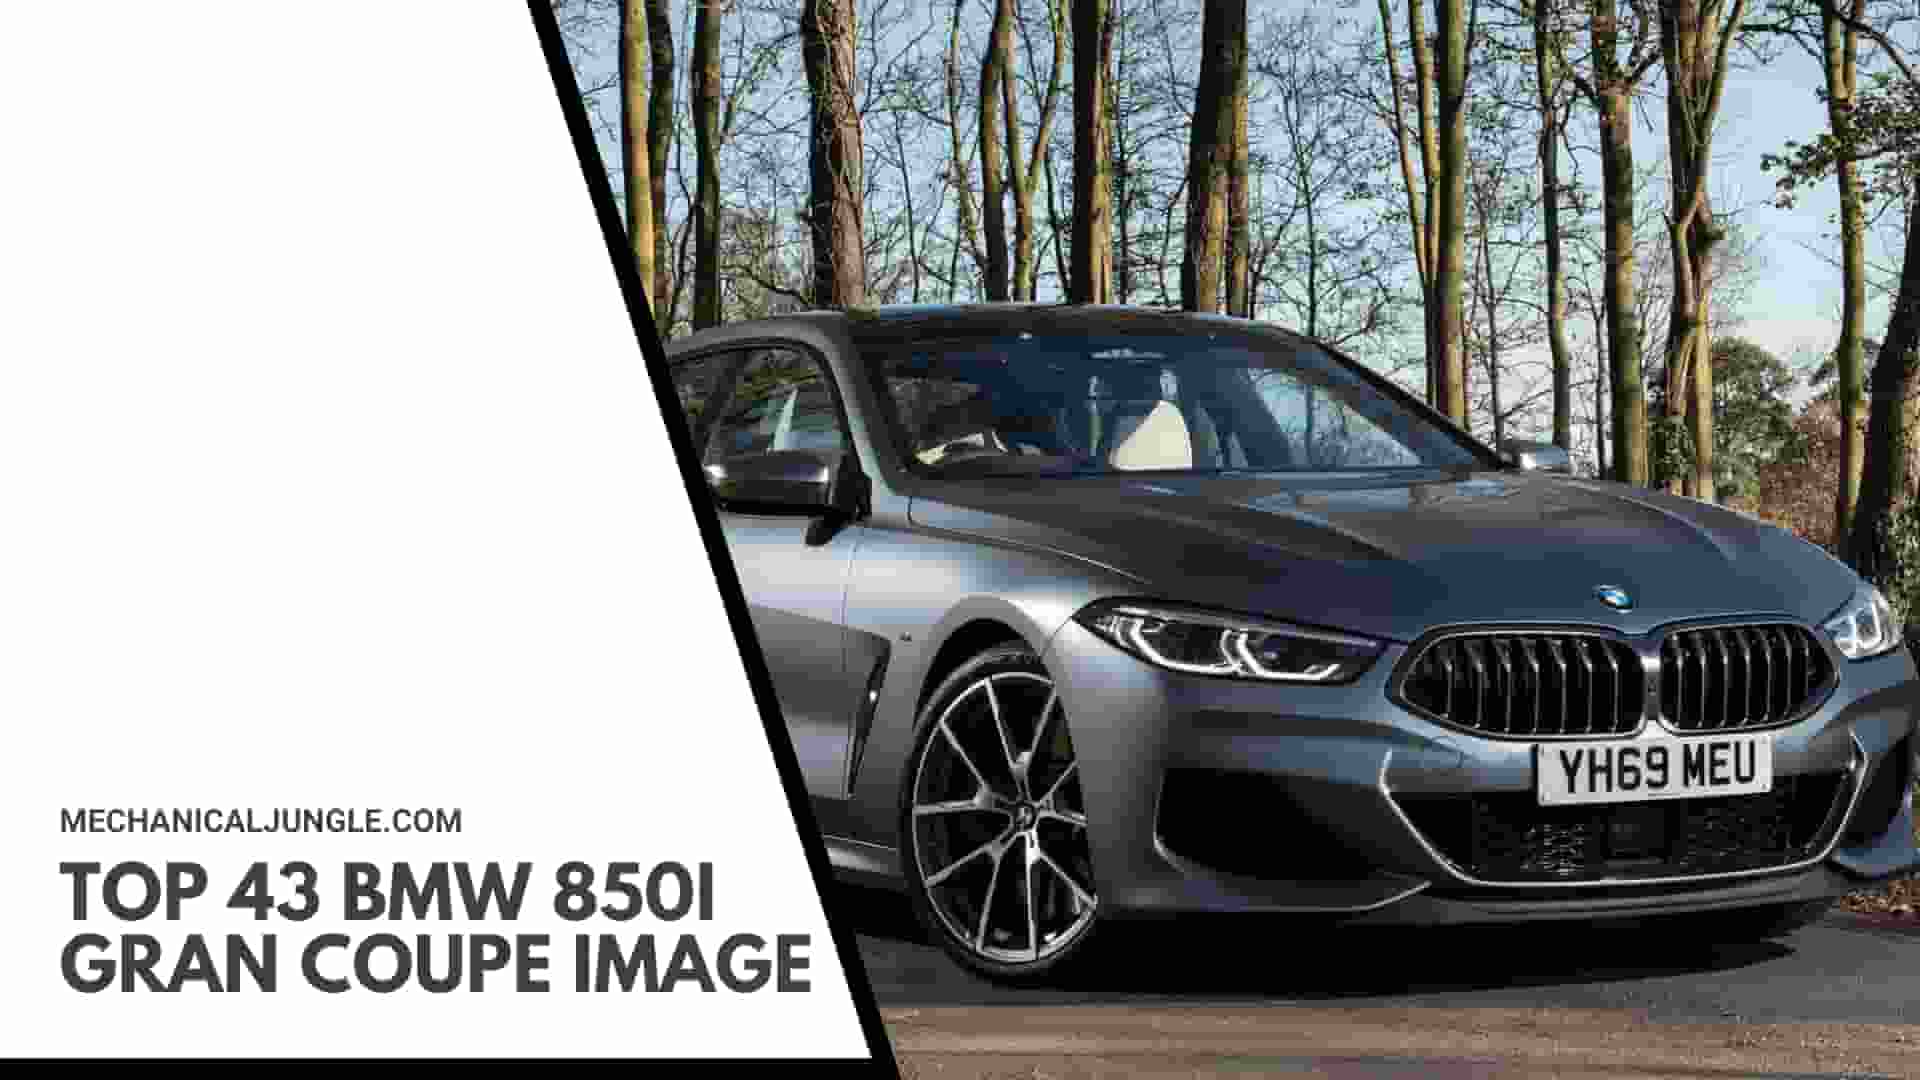 Top 43 BMW 850i Gran Coupe Image